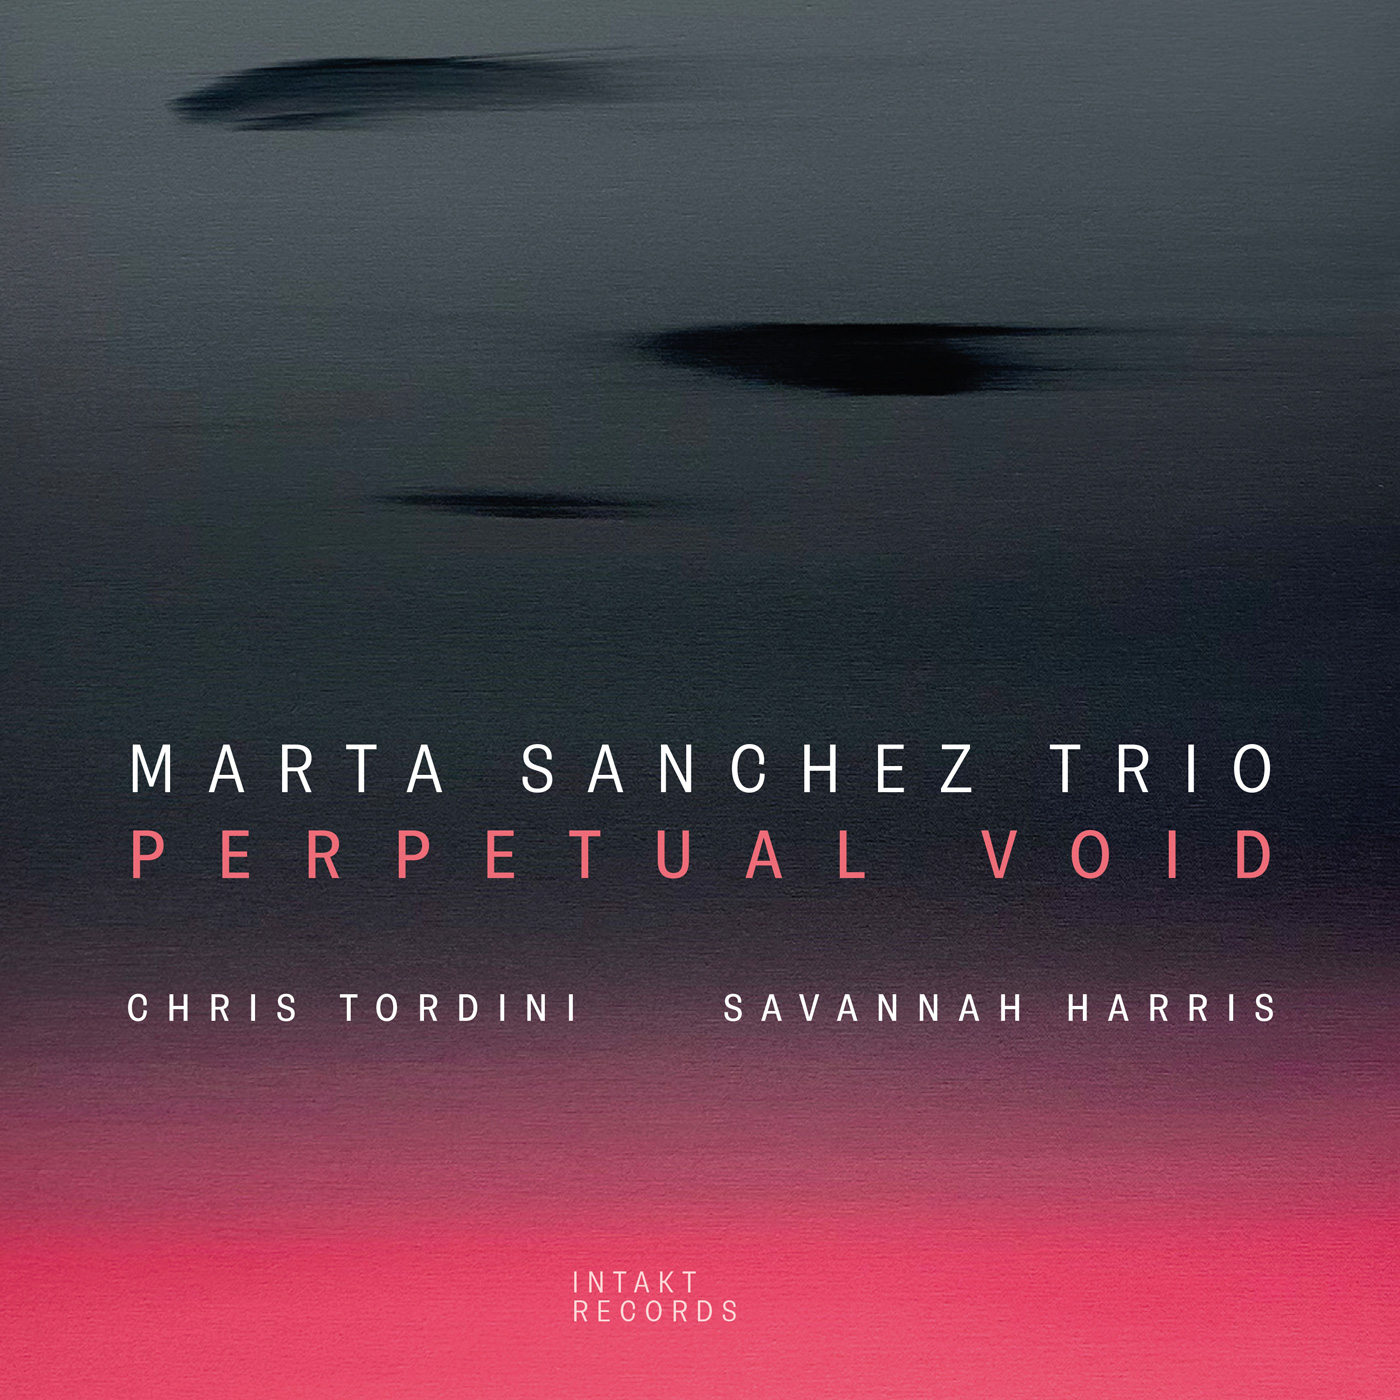 MARTA SANCHEZ TRIO
feat. Chris Tordini and Savannah Harris: PERPETUAL VOID. Intakt records 421